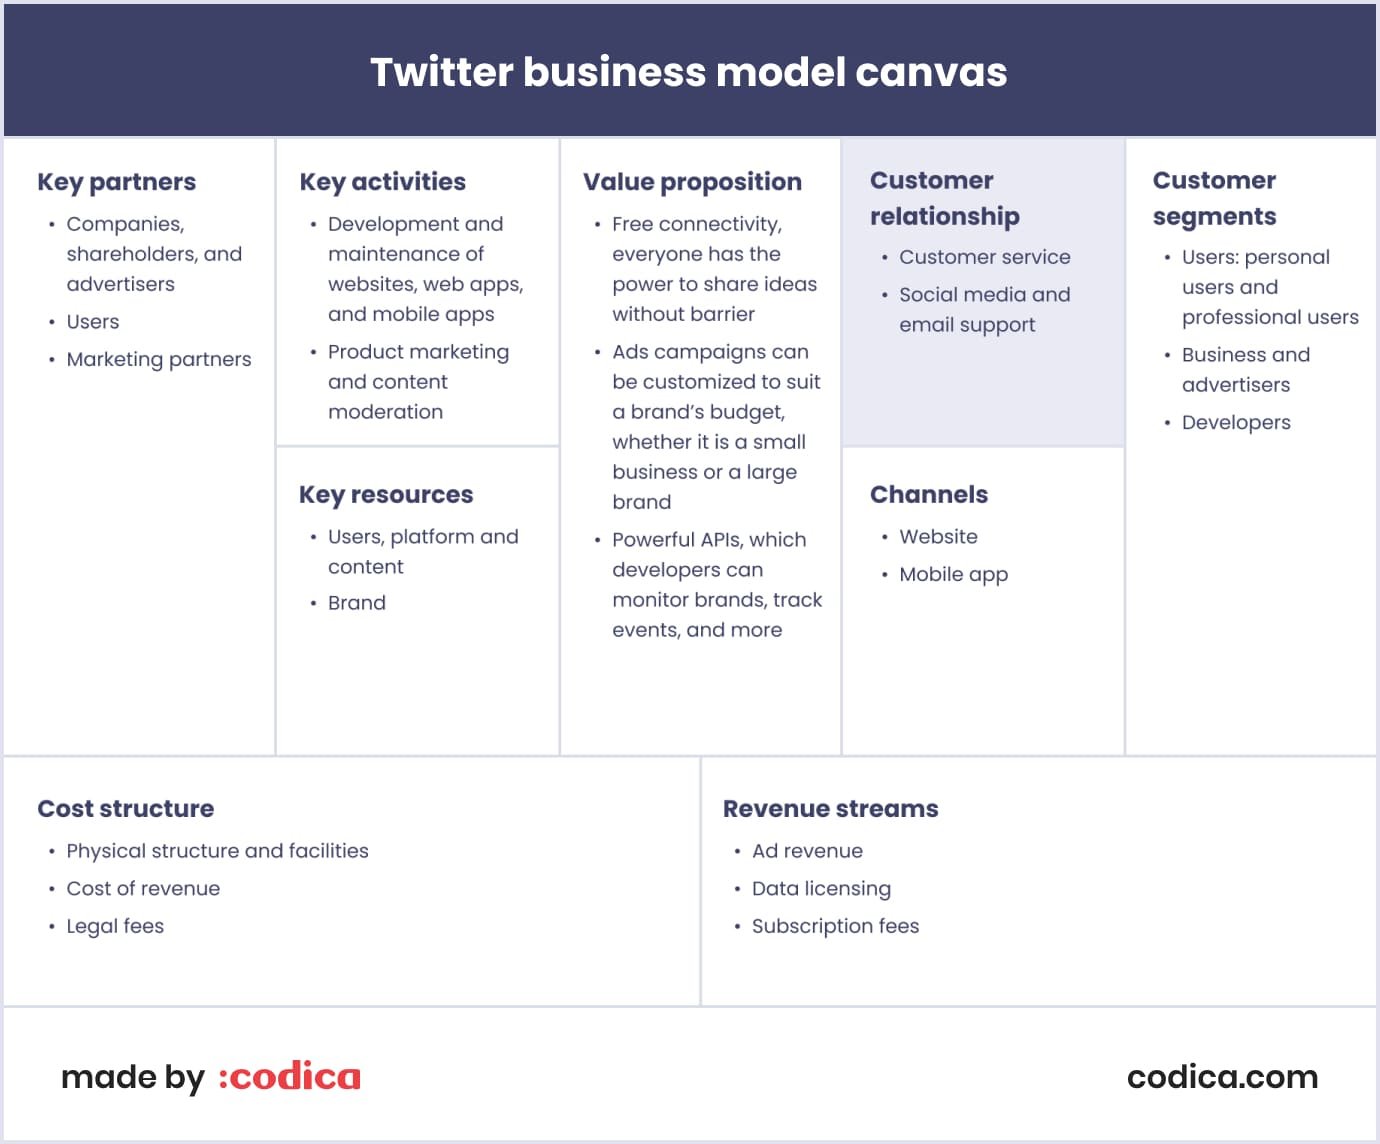 Twitter business model canvas